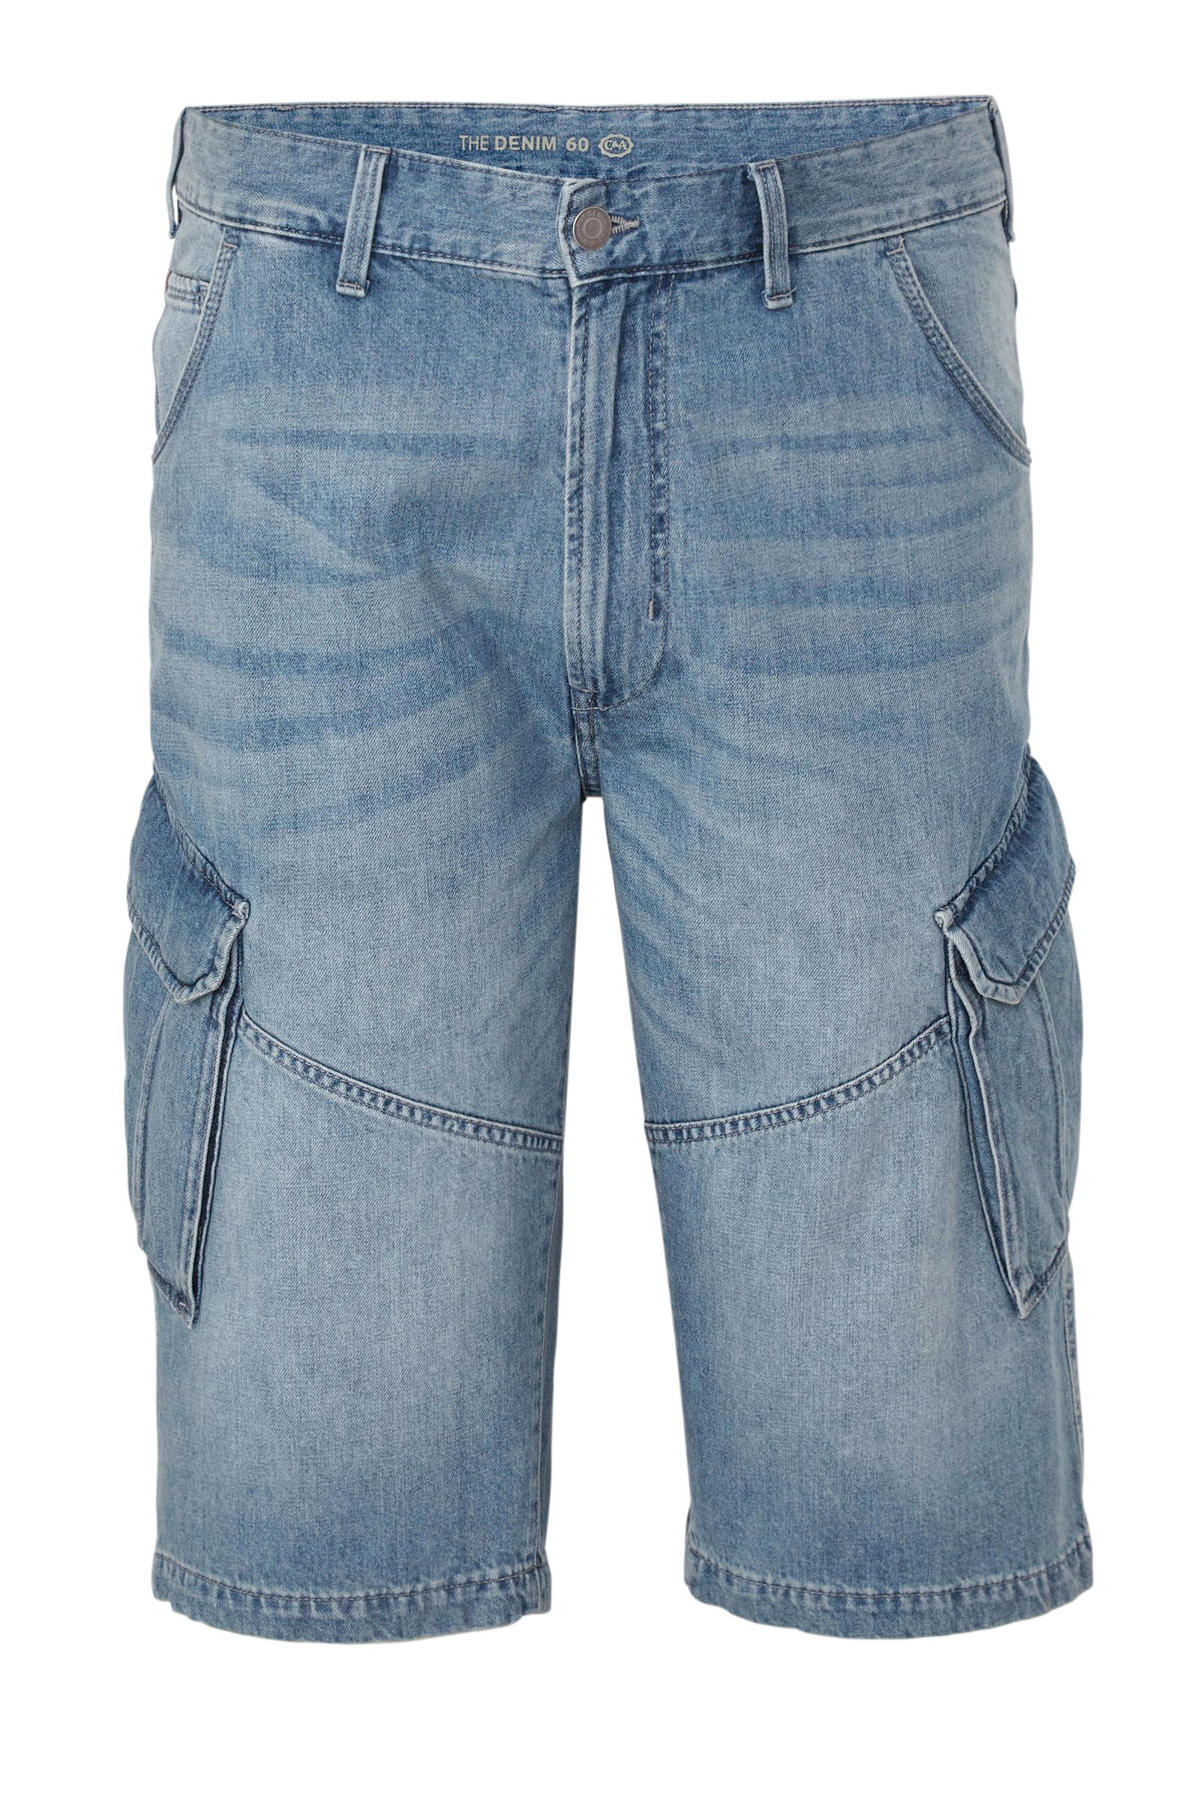 Deskundige Paradox Pionier C&A Heren XL regular fit jeans short | wehkamp